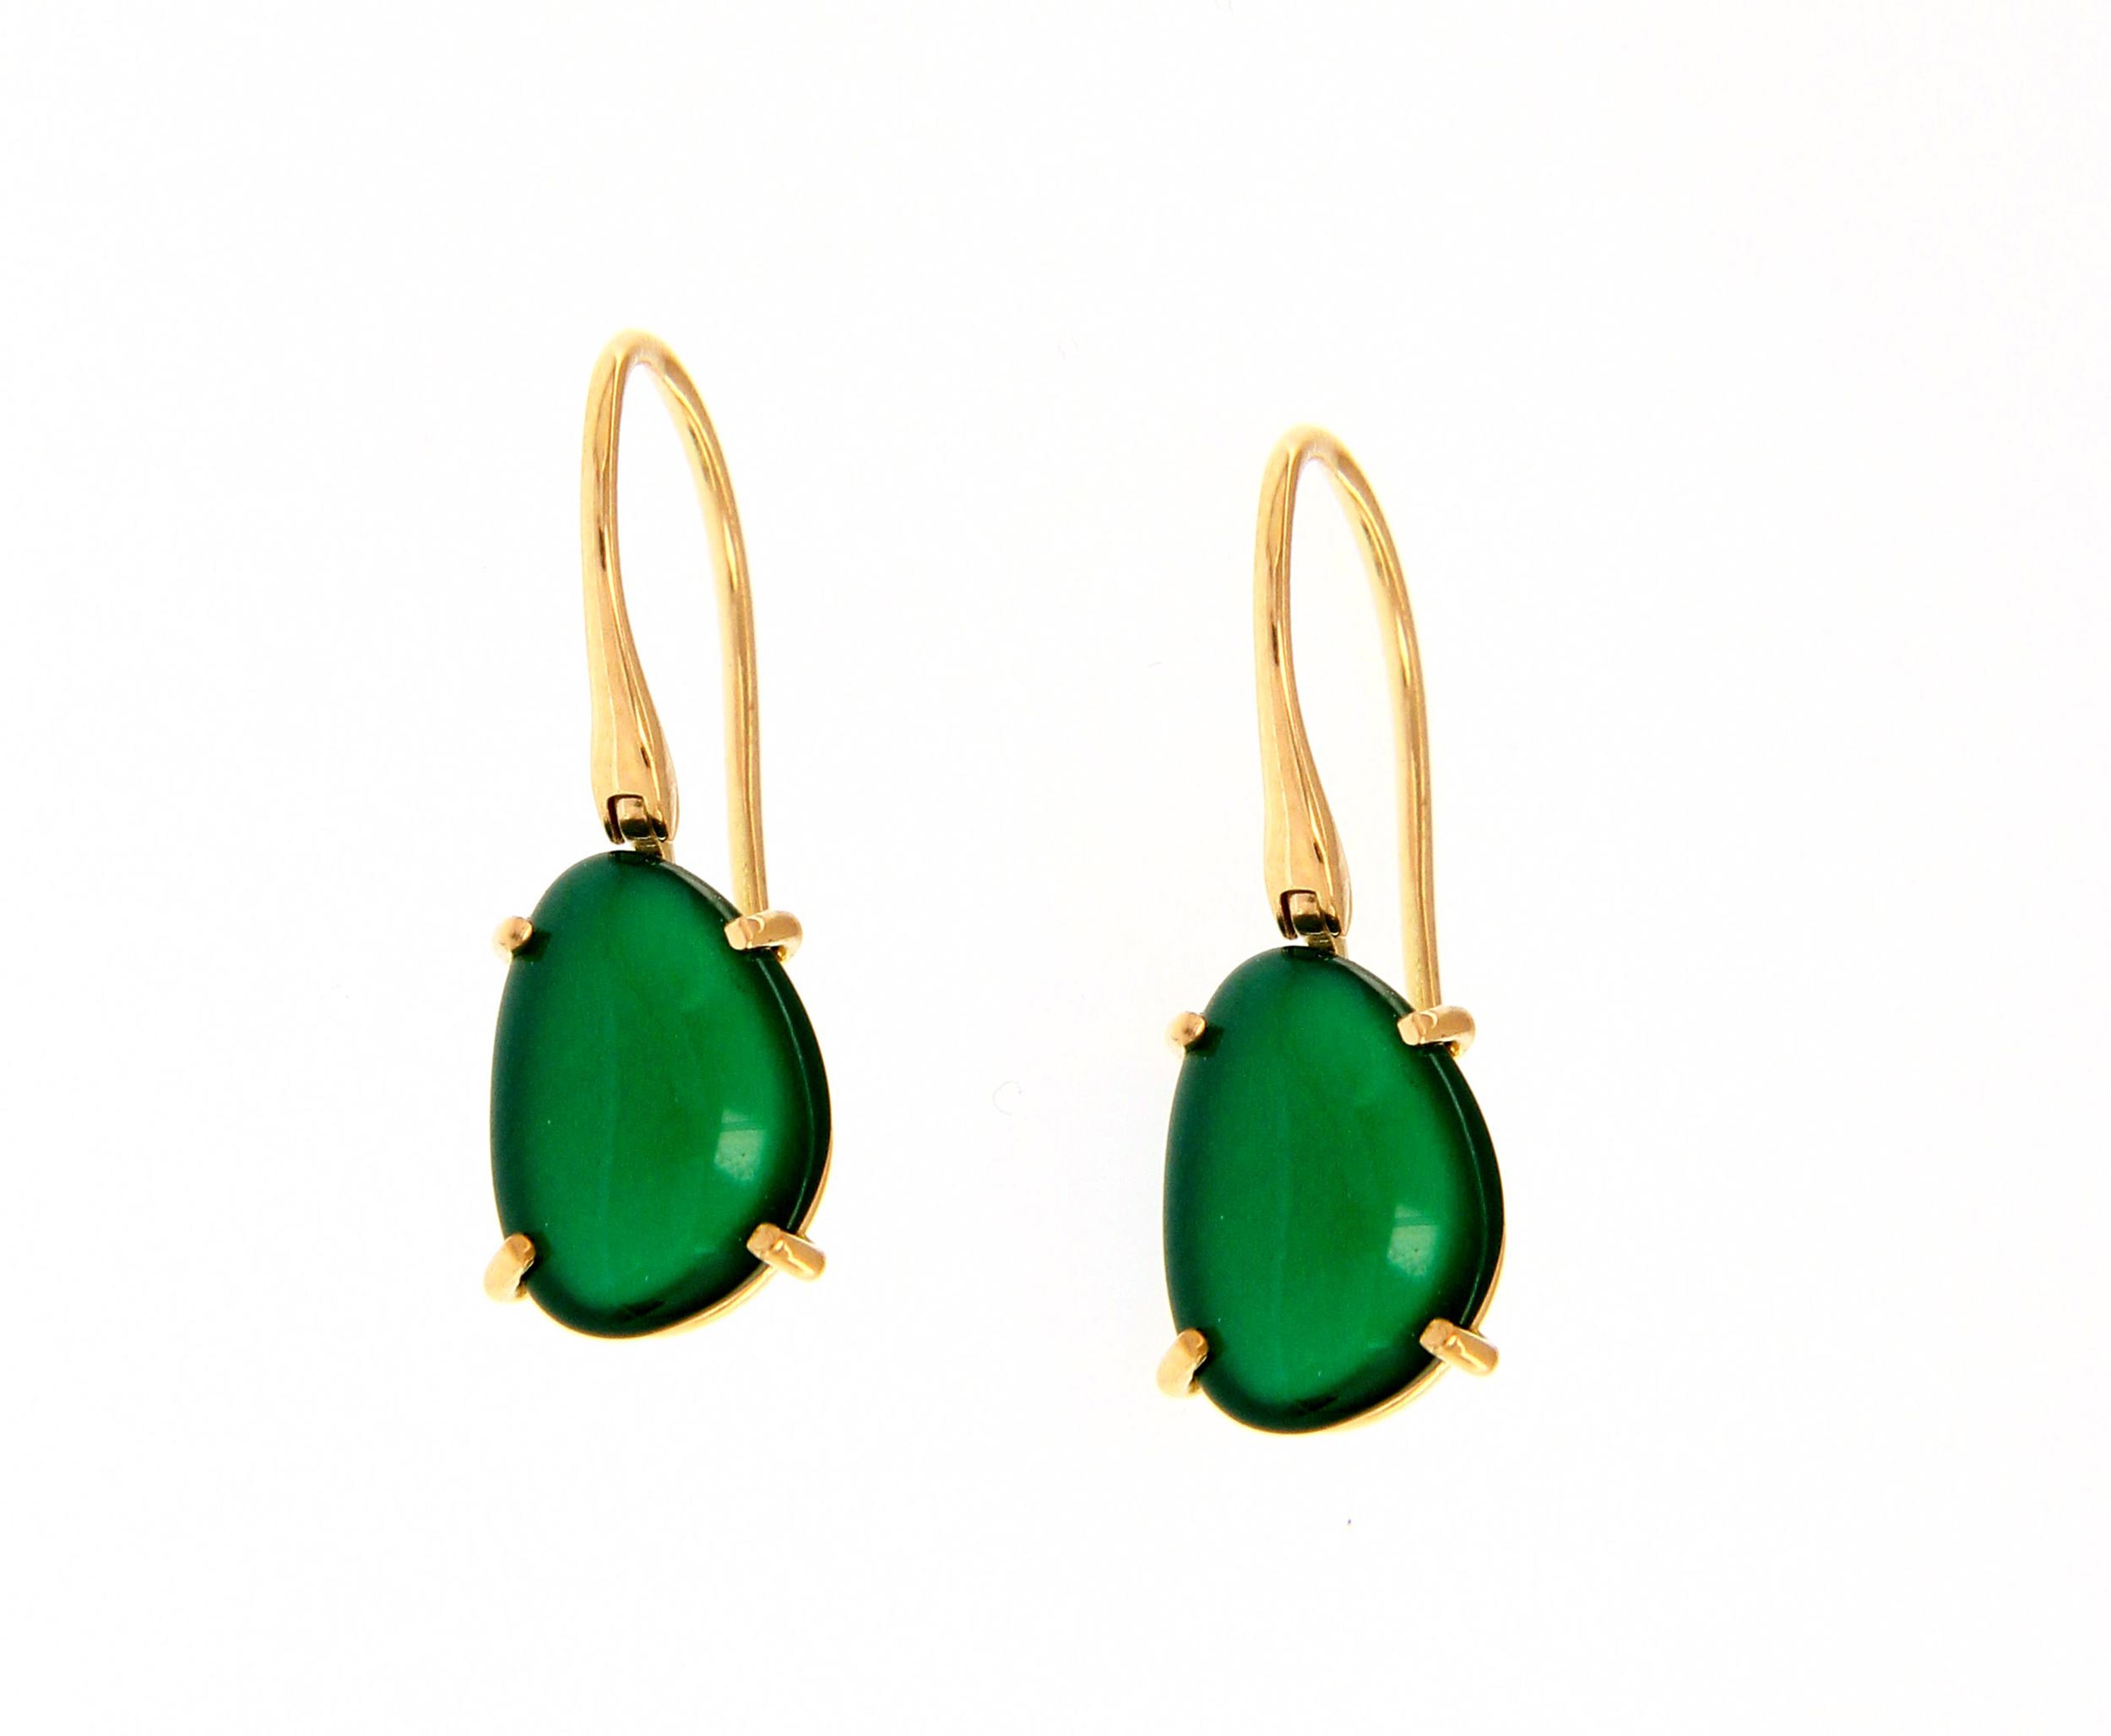 pendientes mujer oro agatas verdes - aretes mujer piedras verdes - gold earrings to buy online - joyeria marga mira